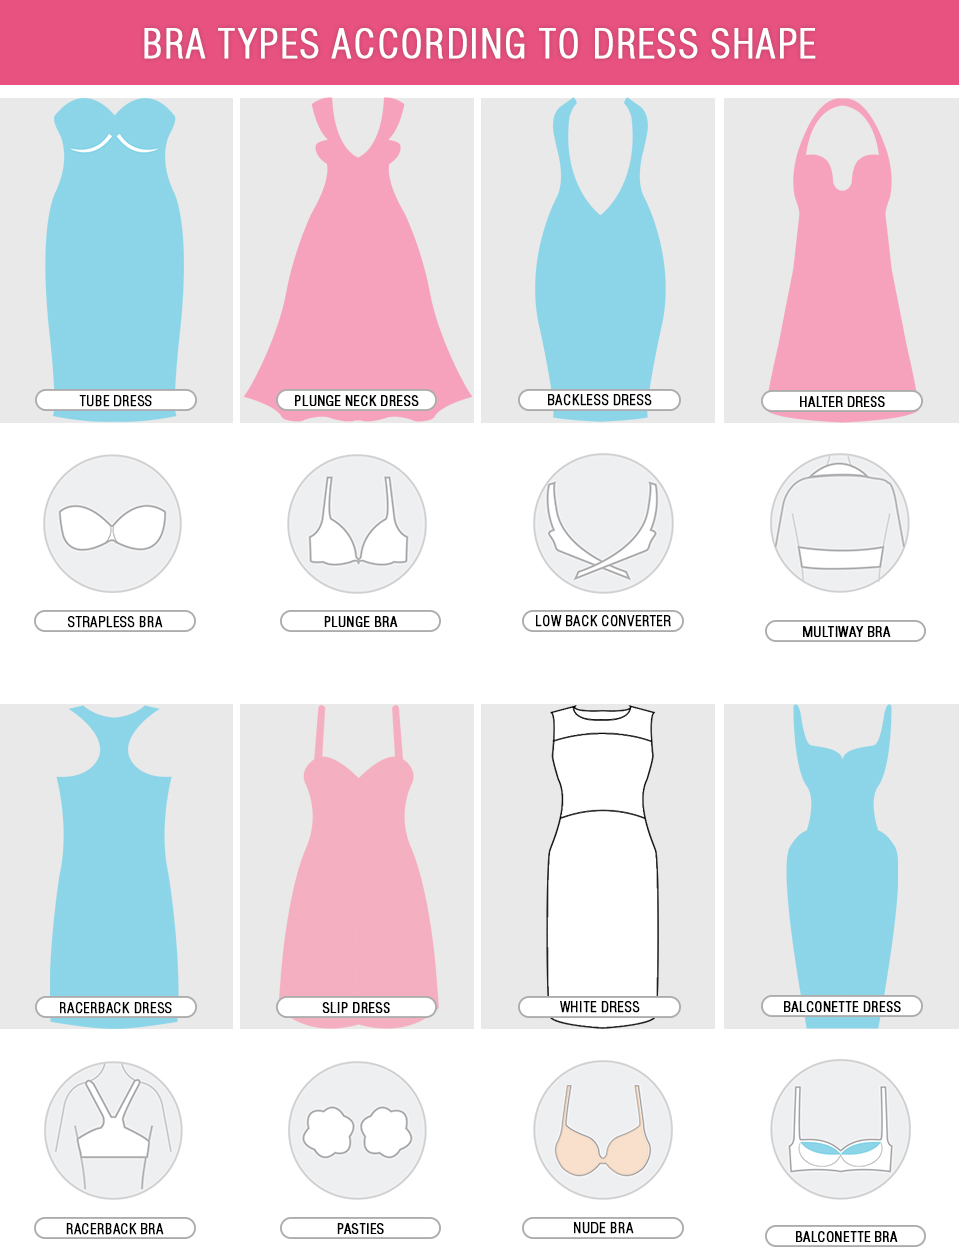 Bra Types According to Dress Shape